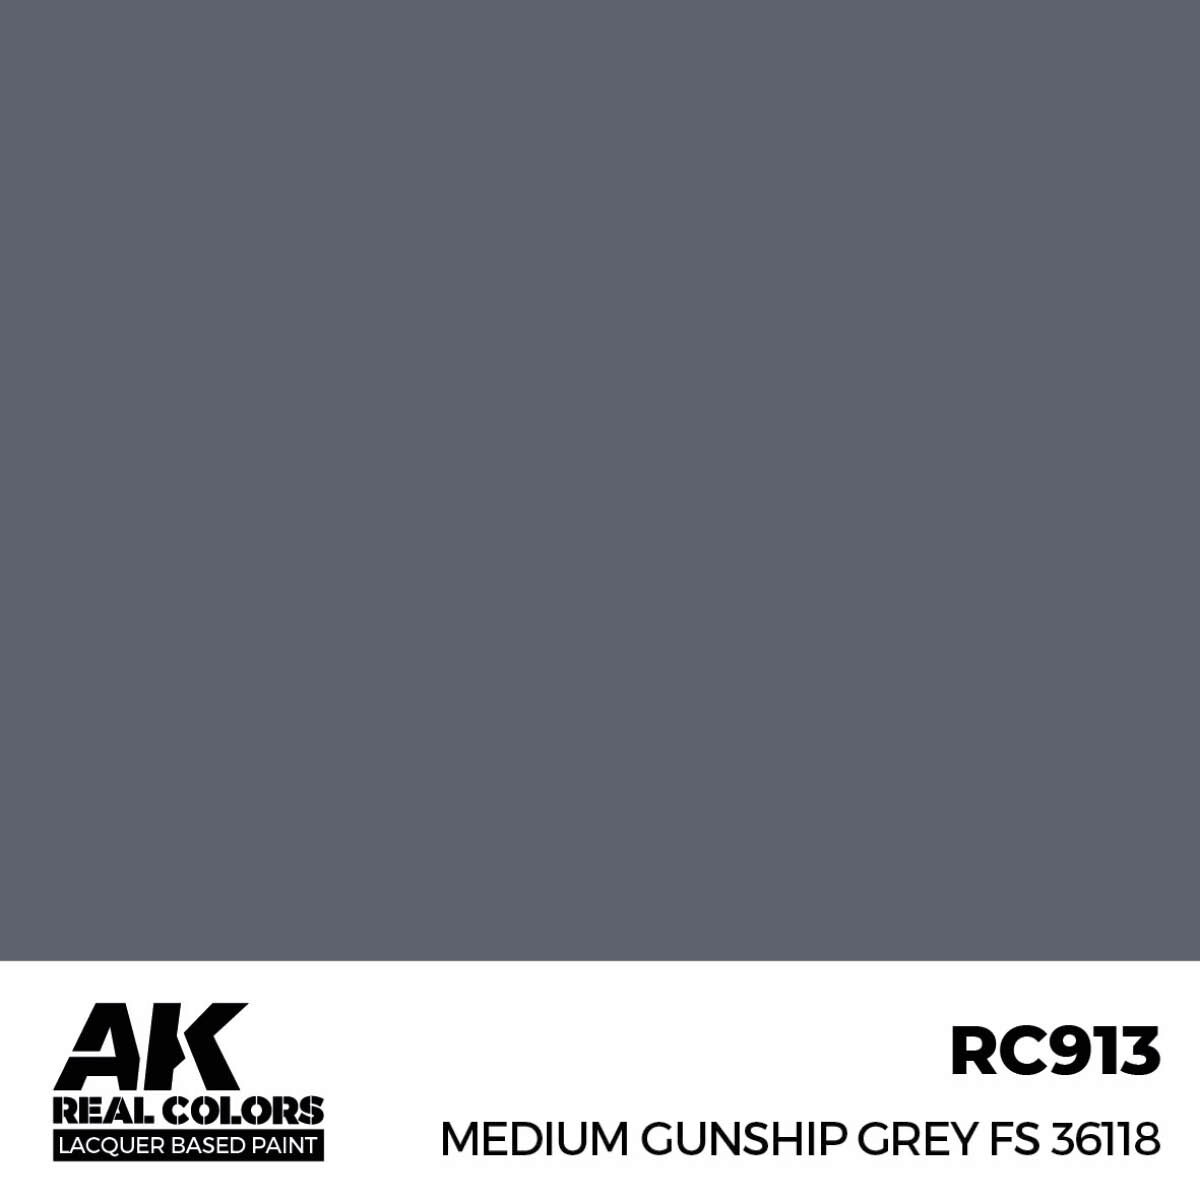 AK RC913 Real Colors Medium Gunship Grey FS 36118 17 ml.